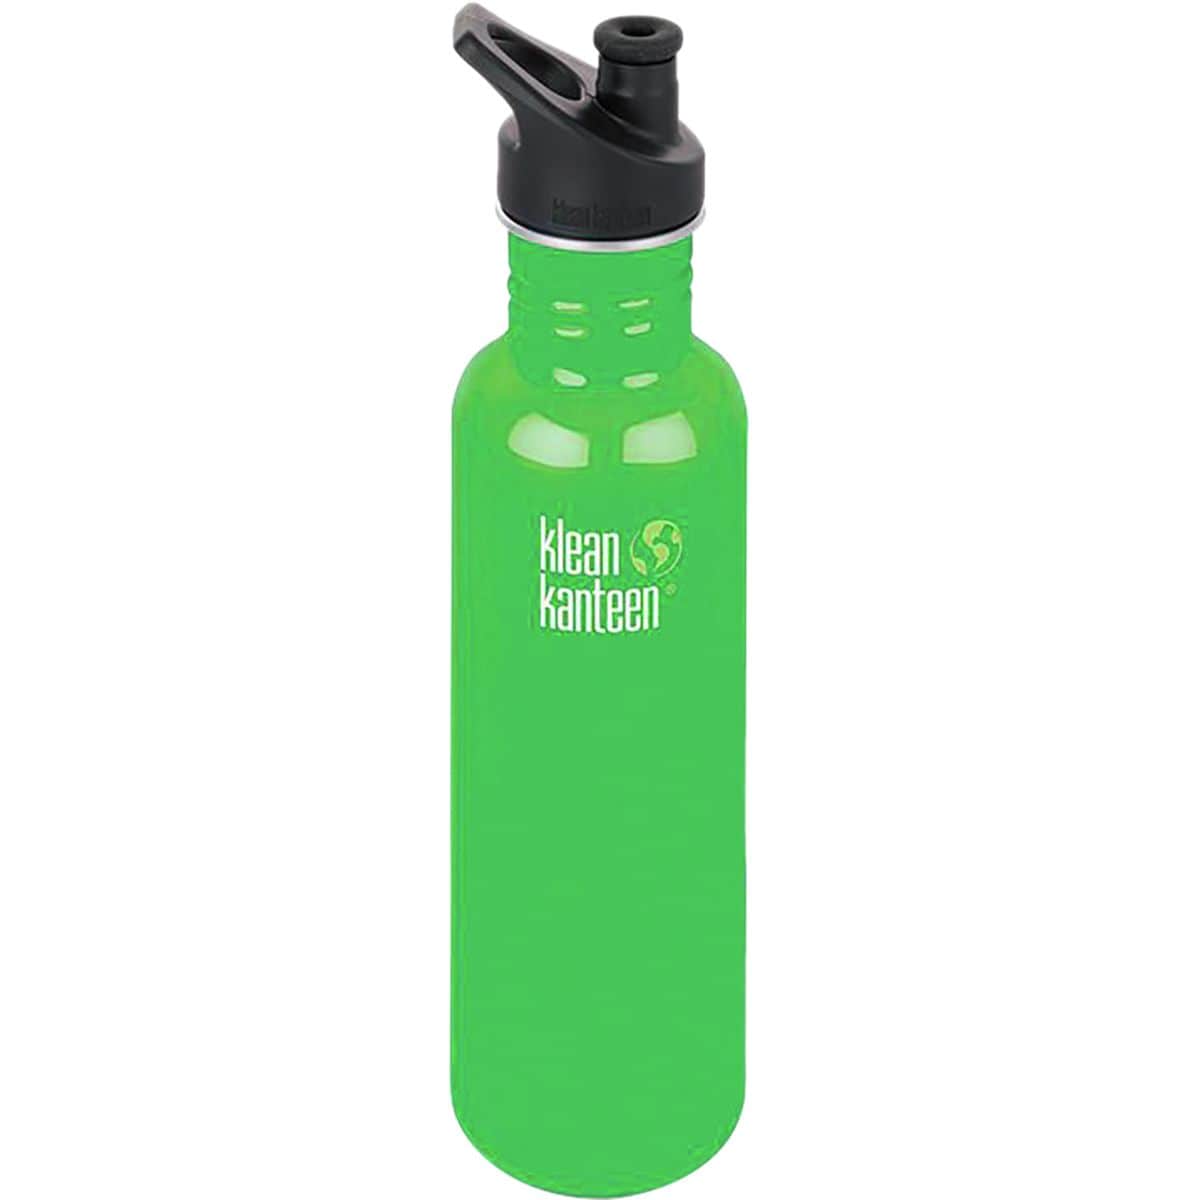 Klean Kanteen 27oz Classic Water Bottle with Loop Cap